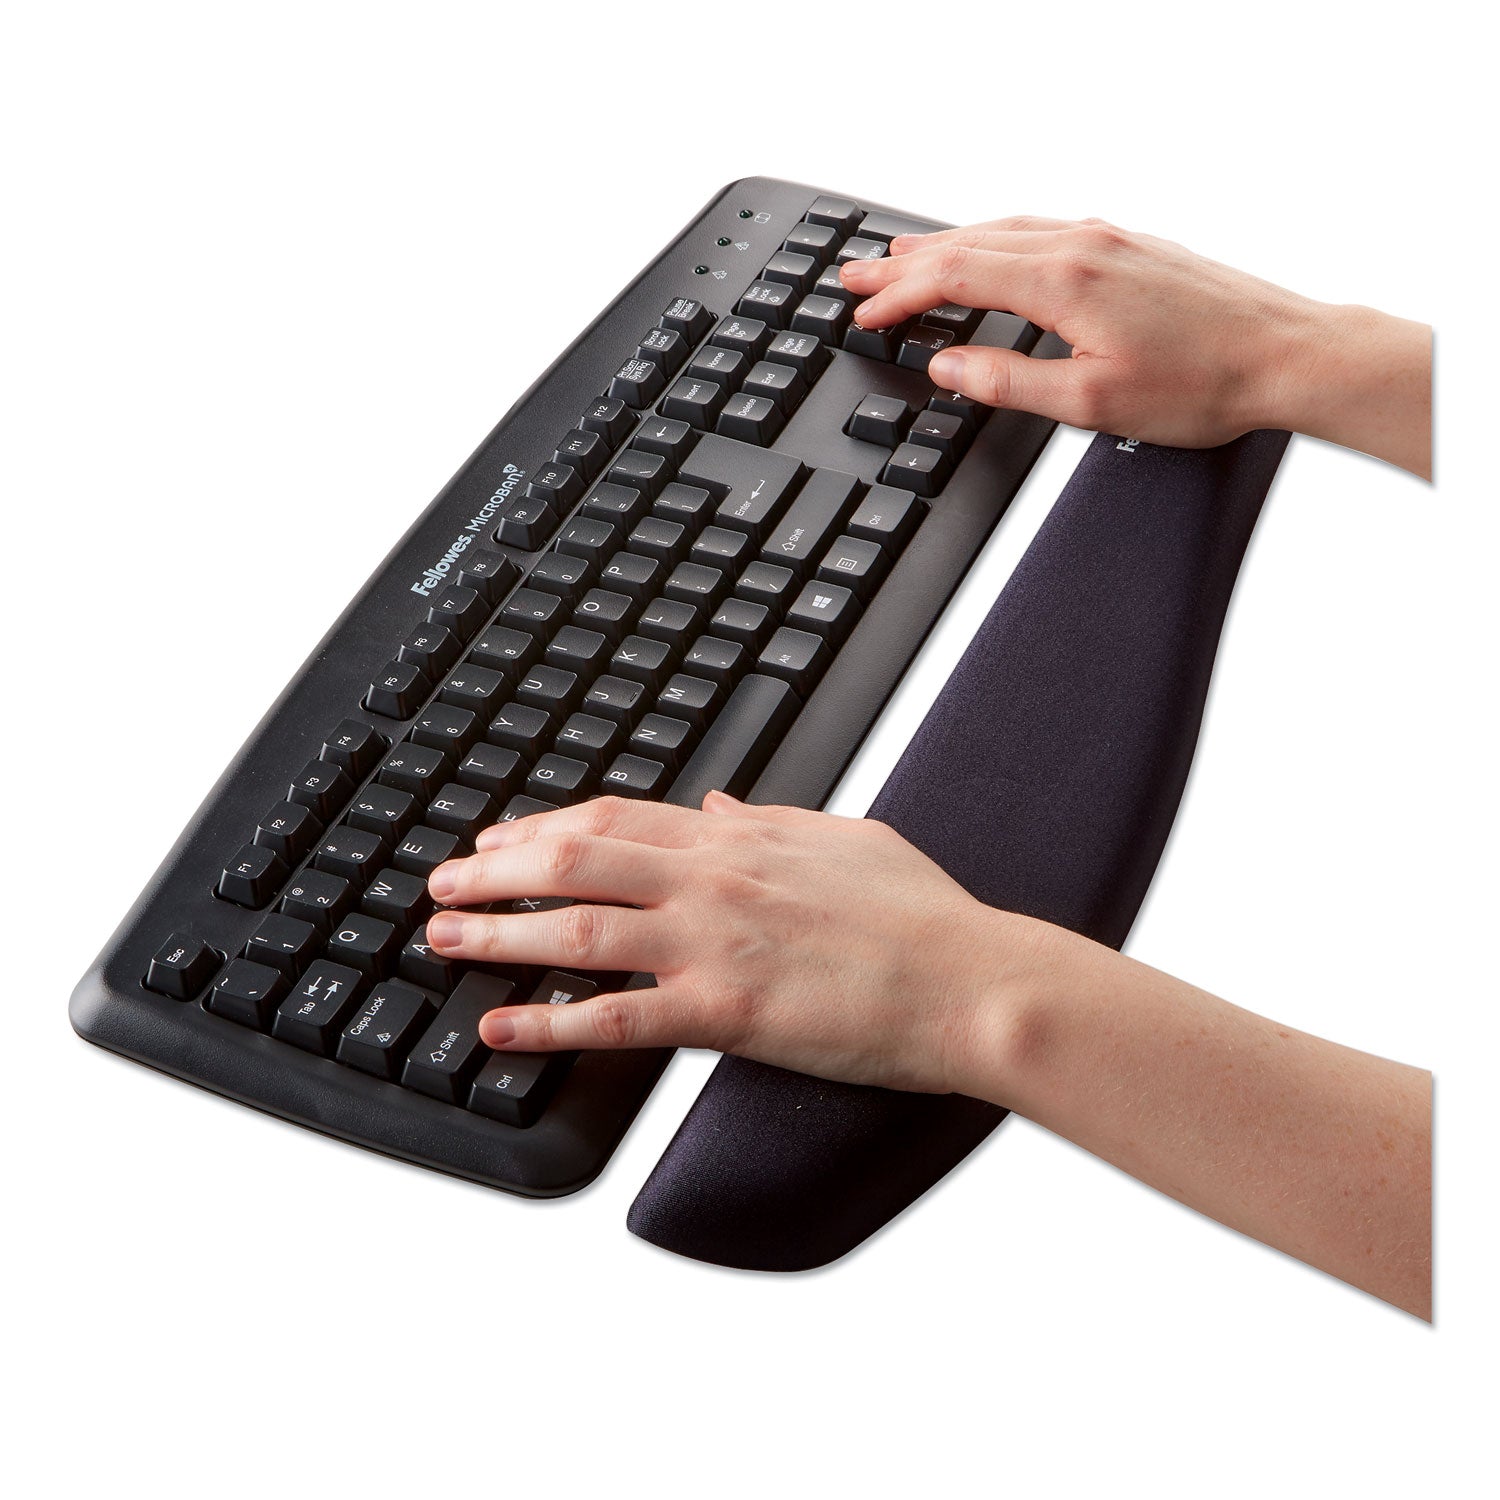 PlushTouch Keyboard Wrist Rest, 18.12 x 3.18, Black - 